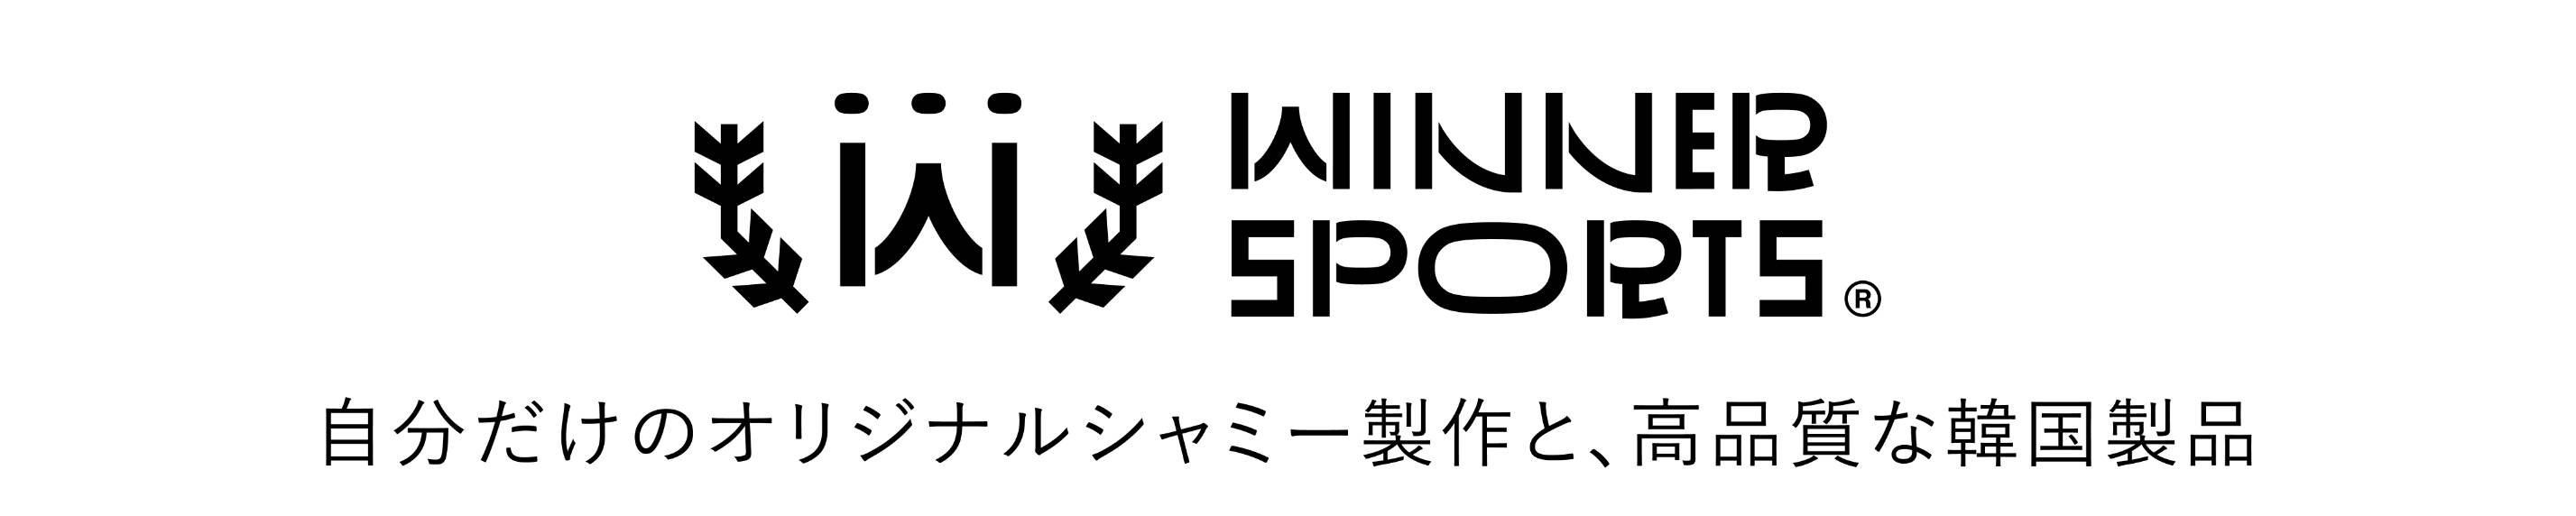 winnersports【ボウリング用品ショップ】